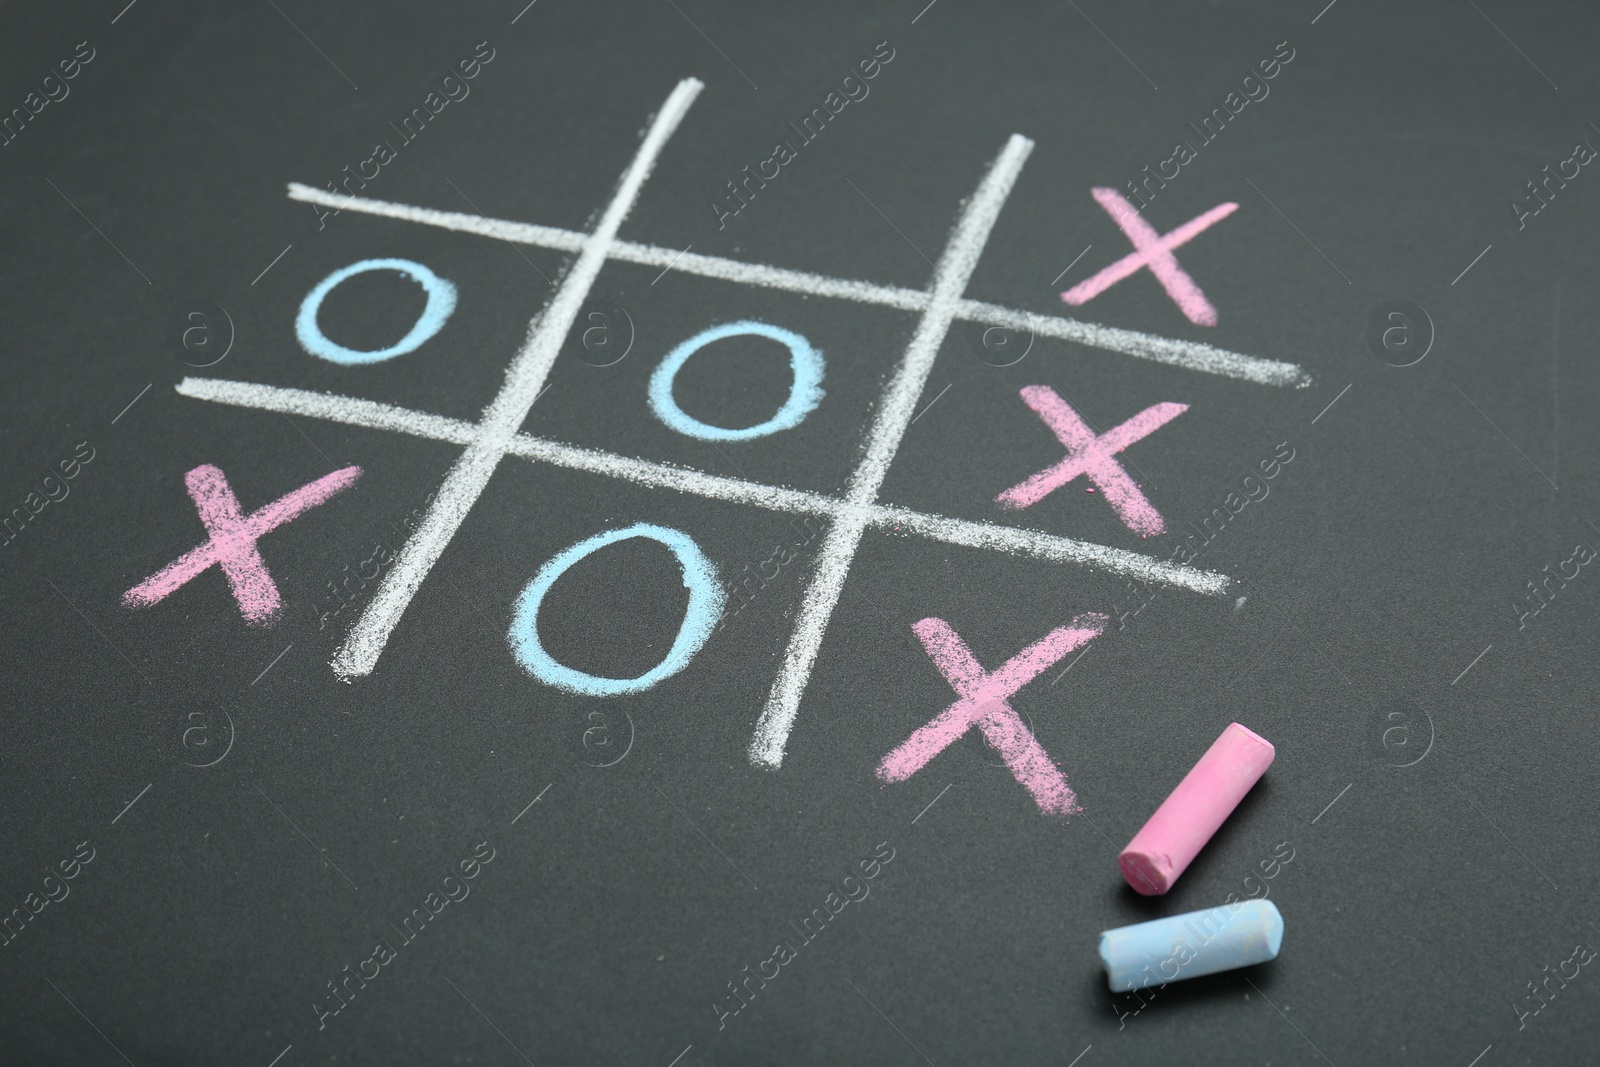 Photo of Tic tac toe game drawn on chalkboard